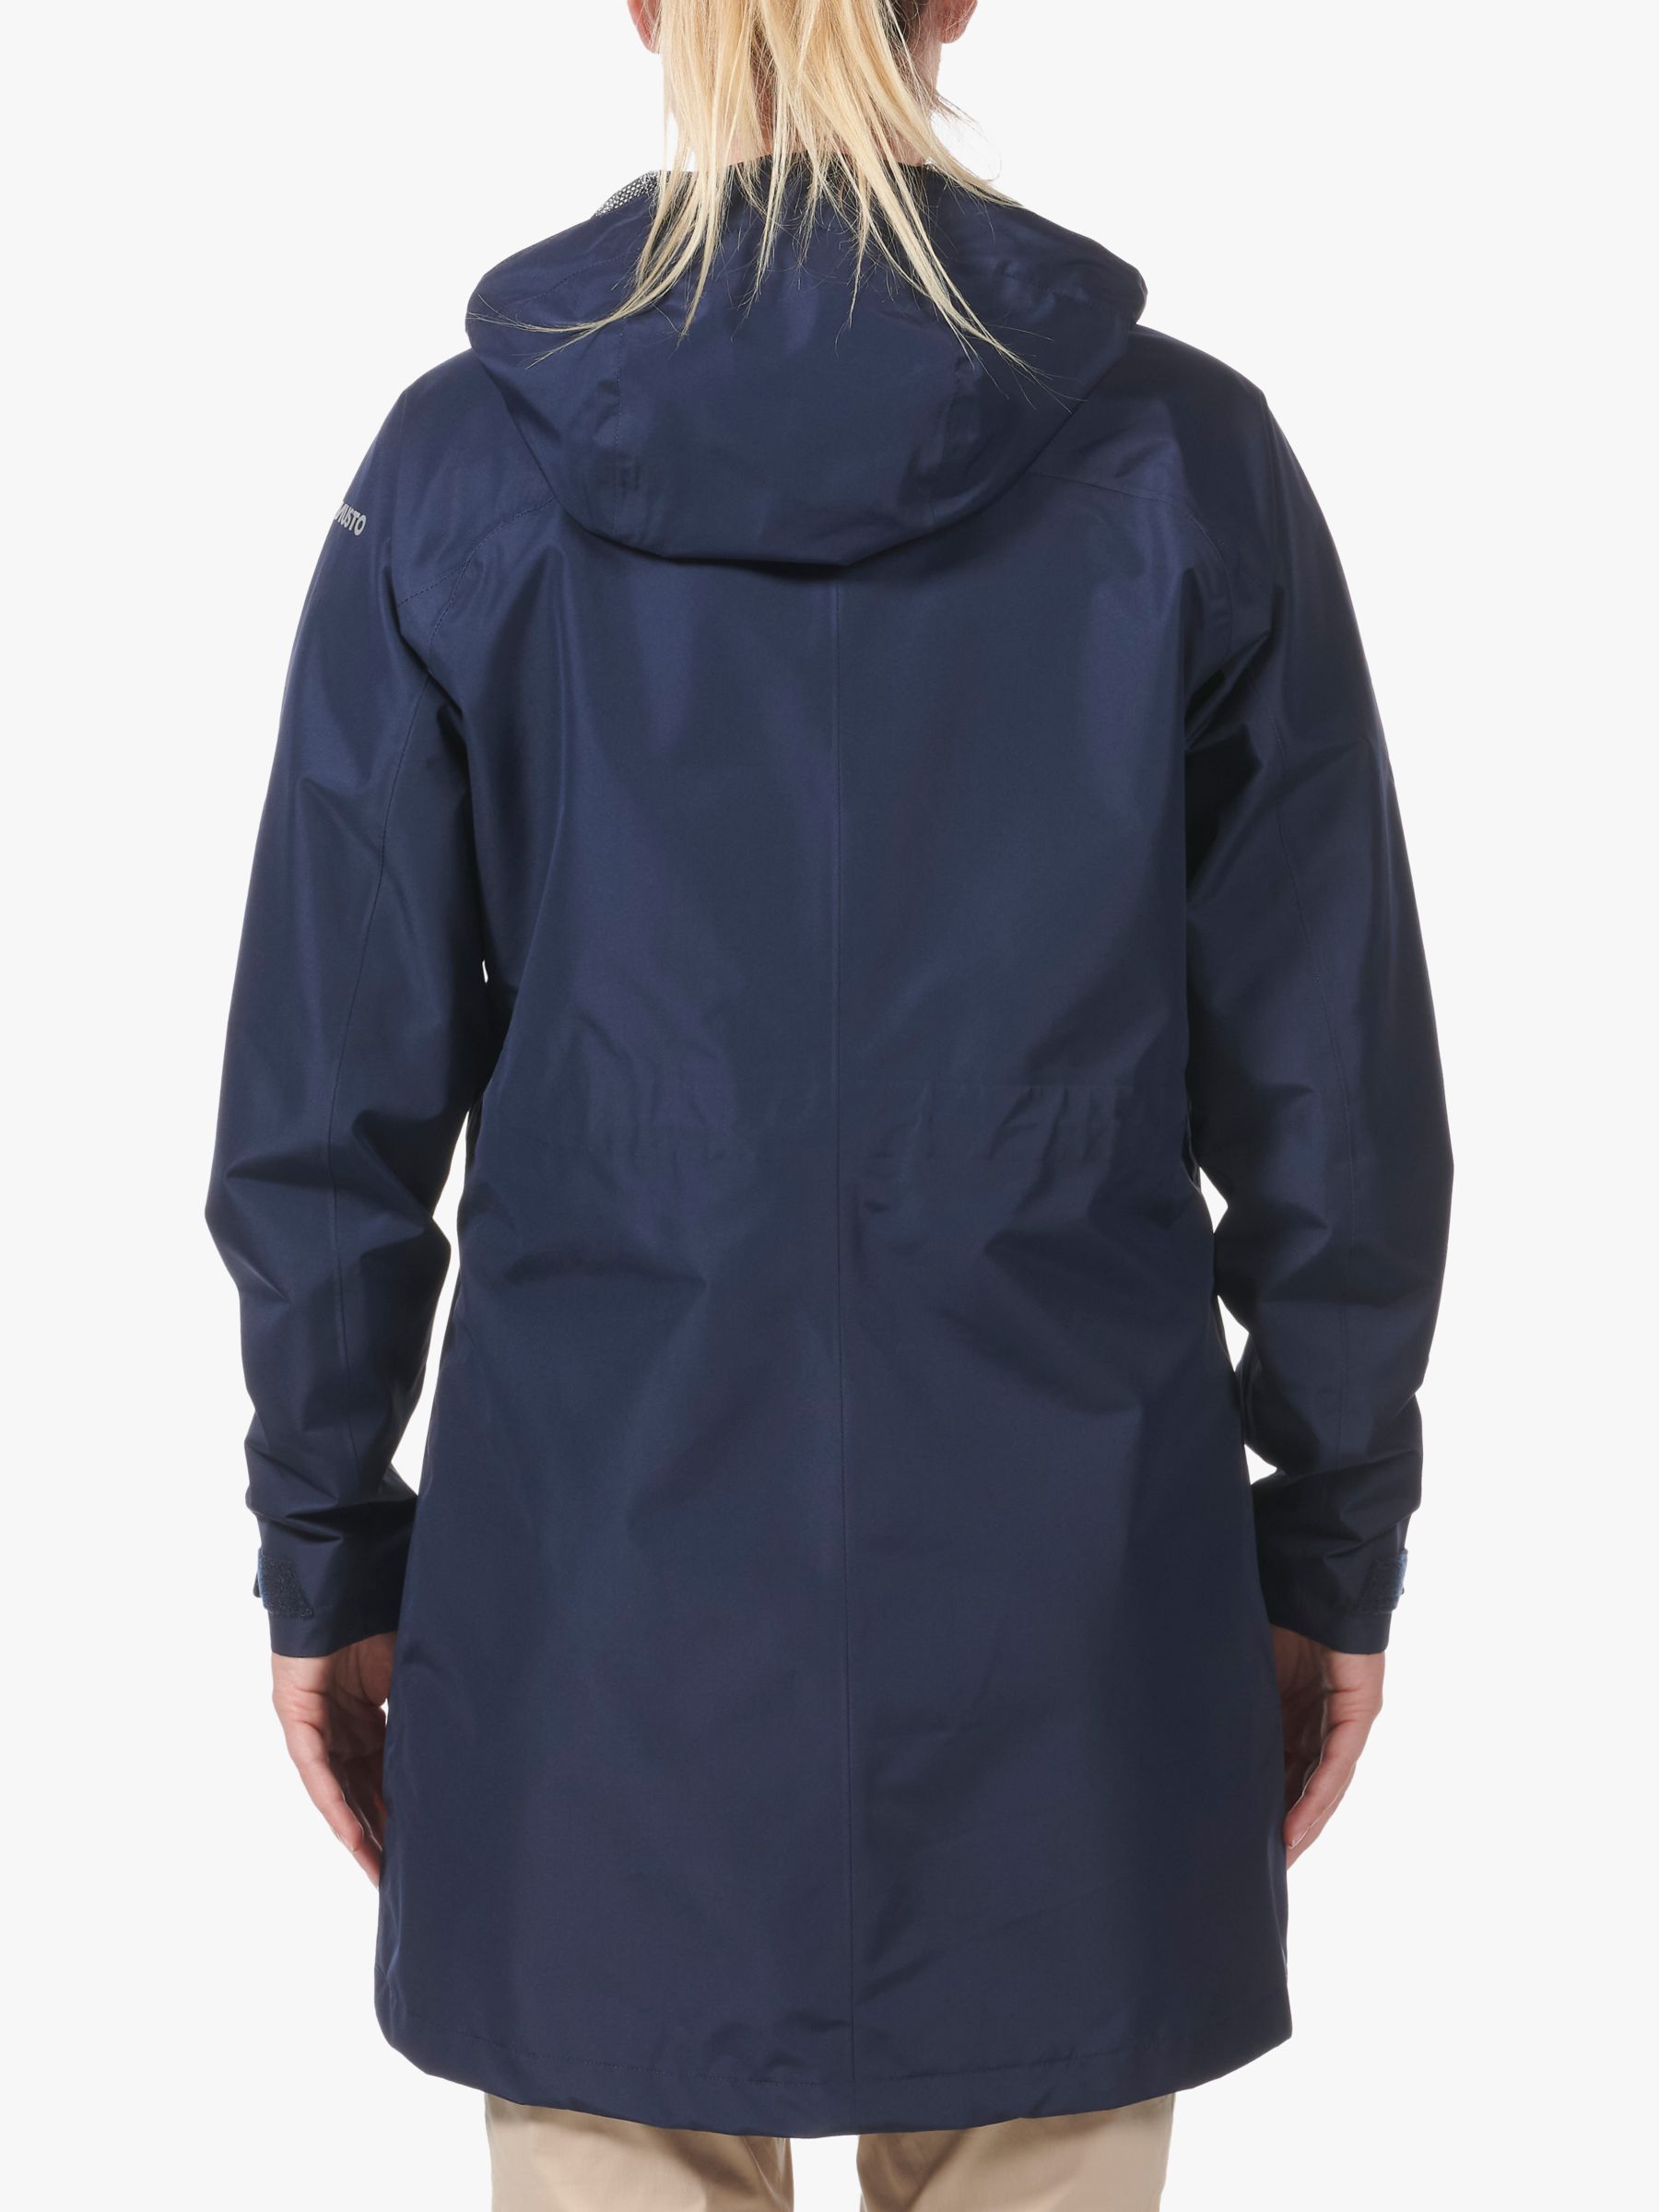 Musto Sardinia 2.0 Women's Waterproof Jacket, Navy, 8